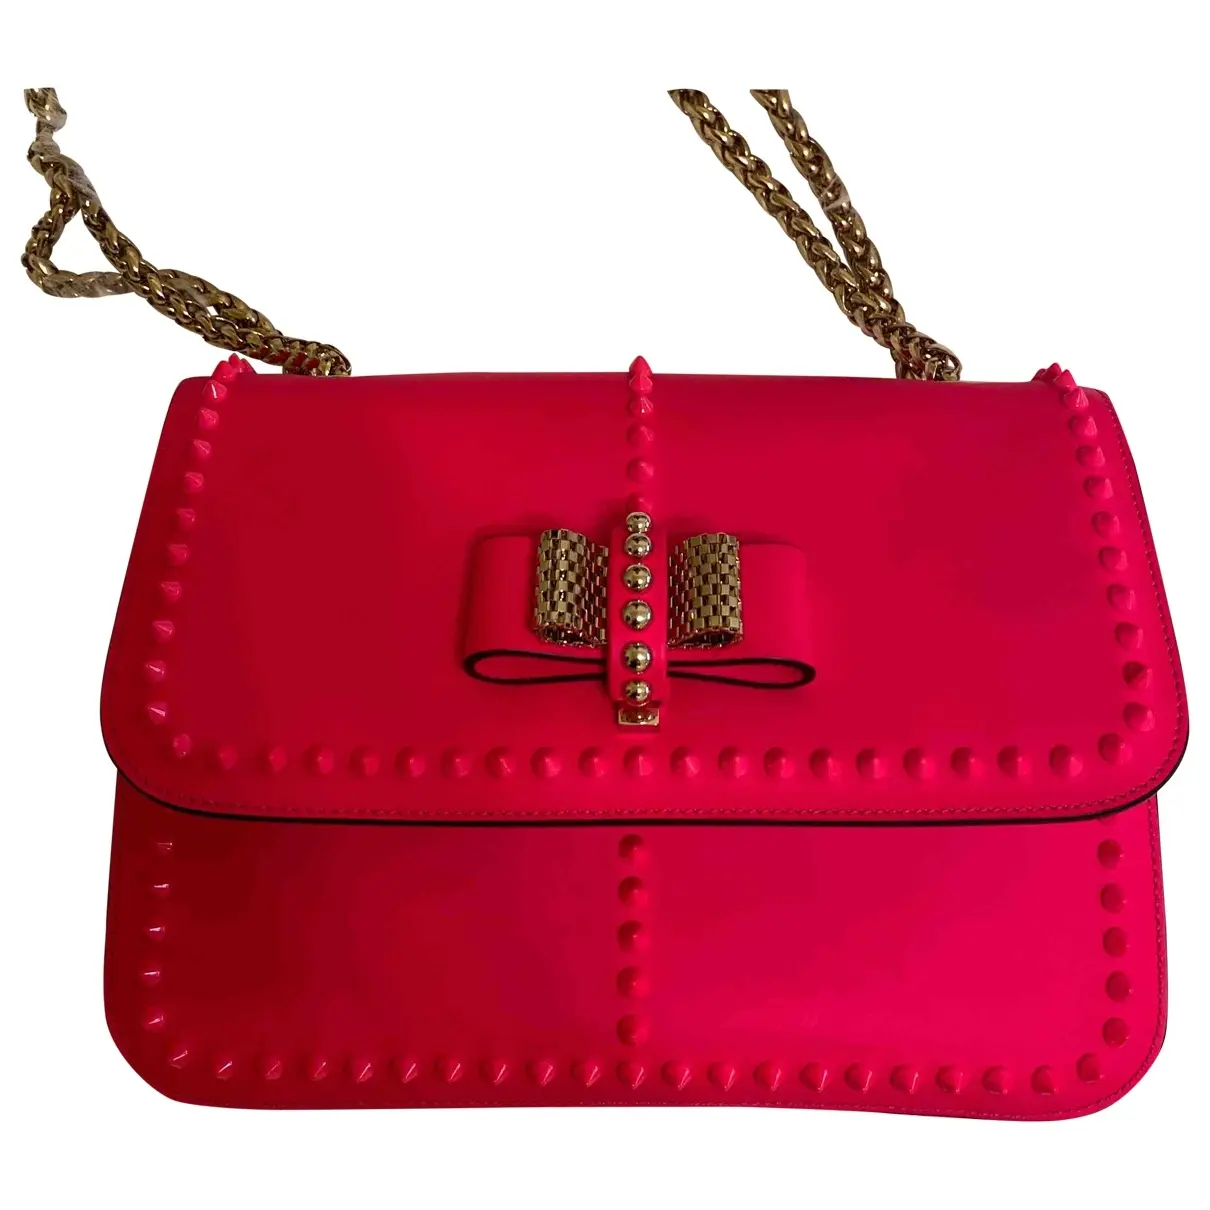 Sweet Charity leather handbag Christian Louboutin